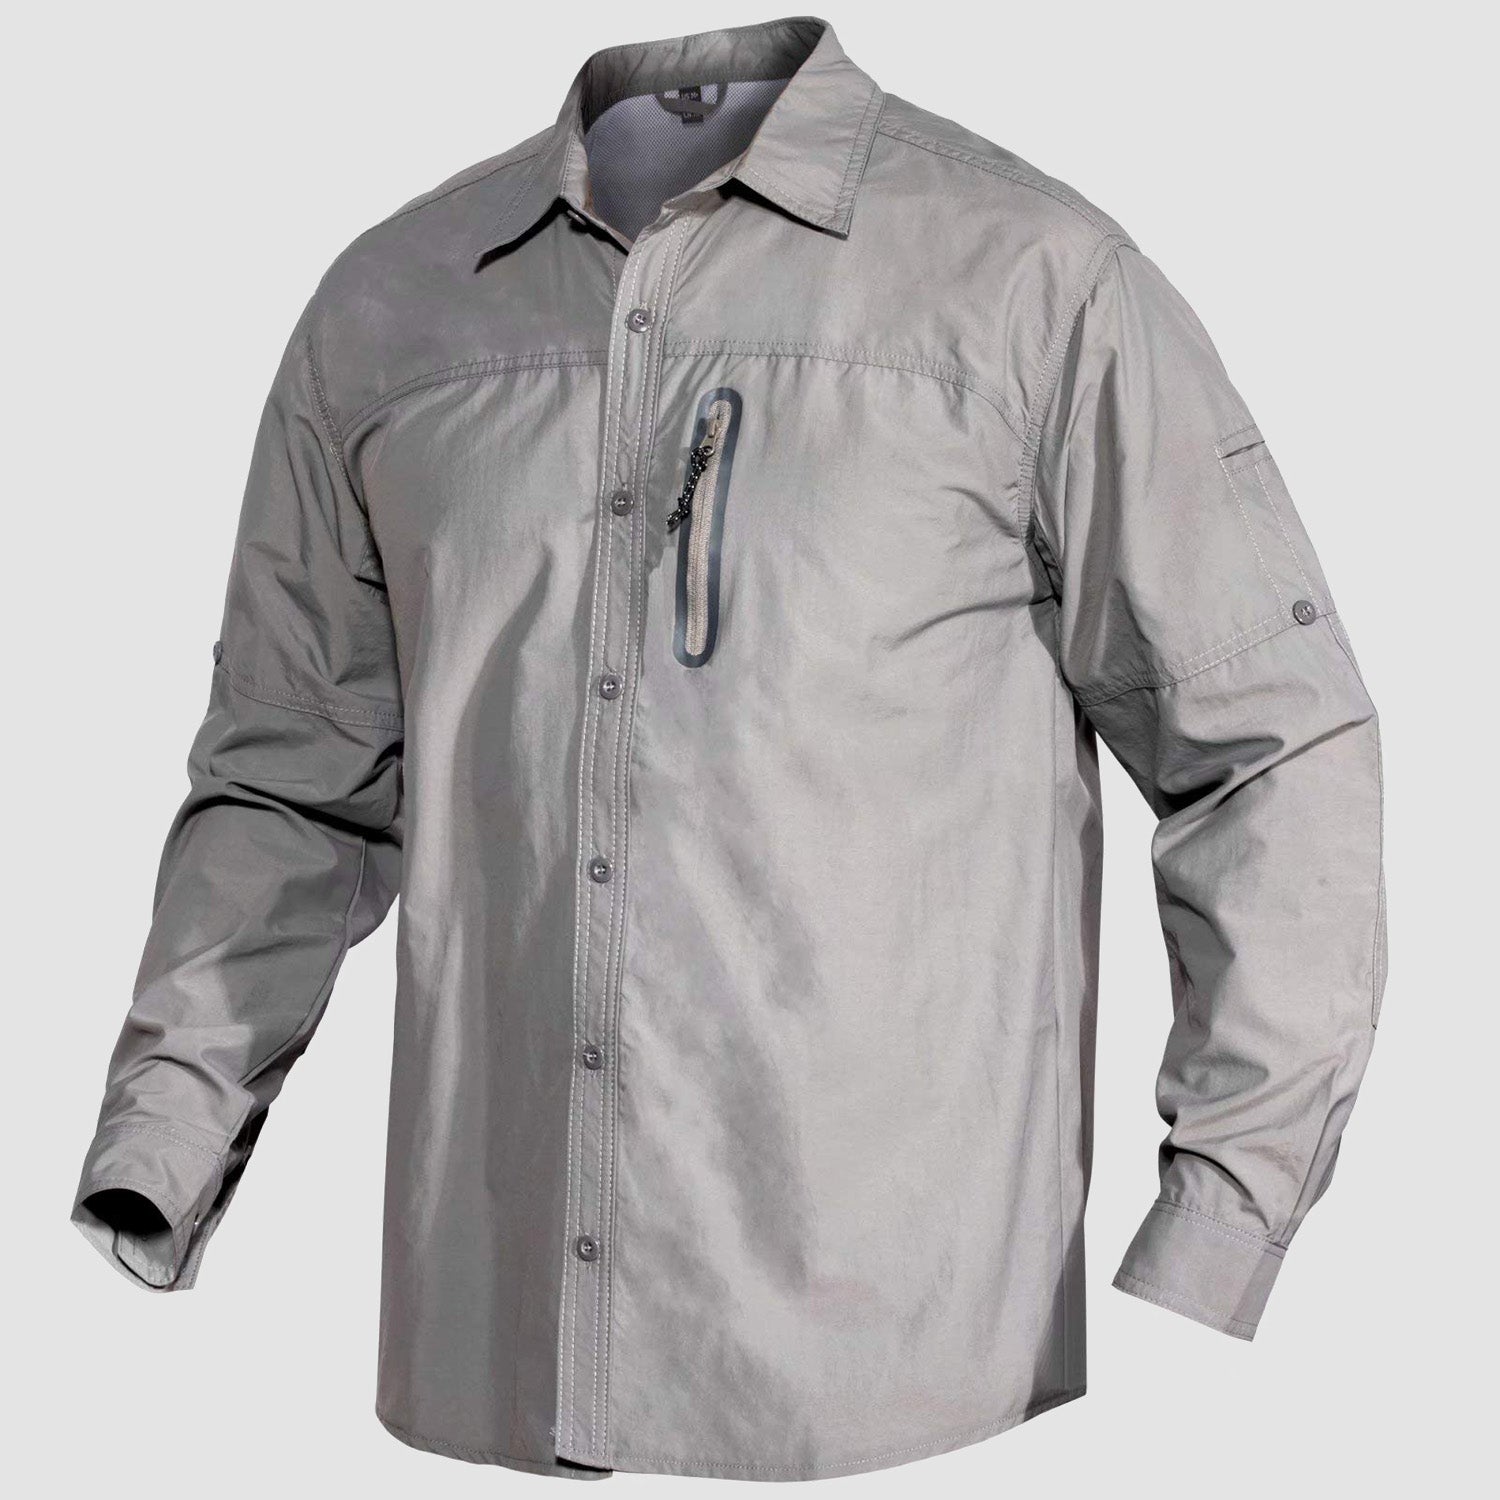 Men's Tactical Shirts with Zipper Pocket Long Sleeve Work Shirts